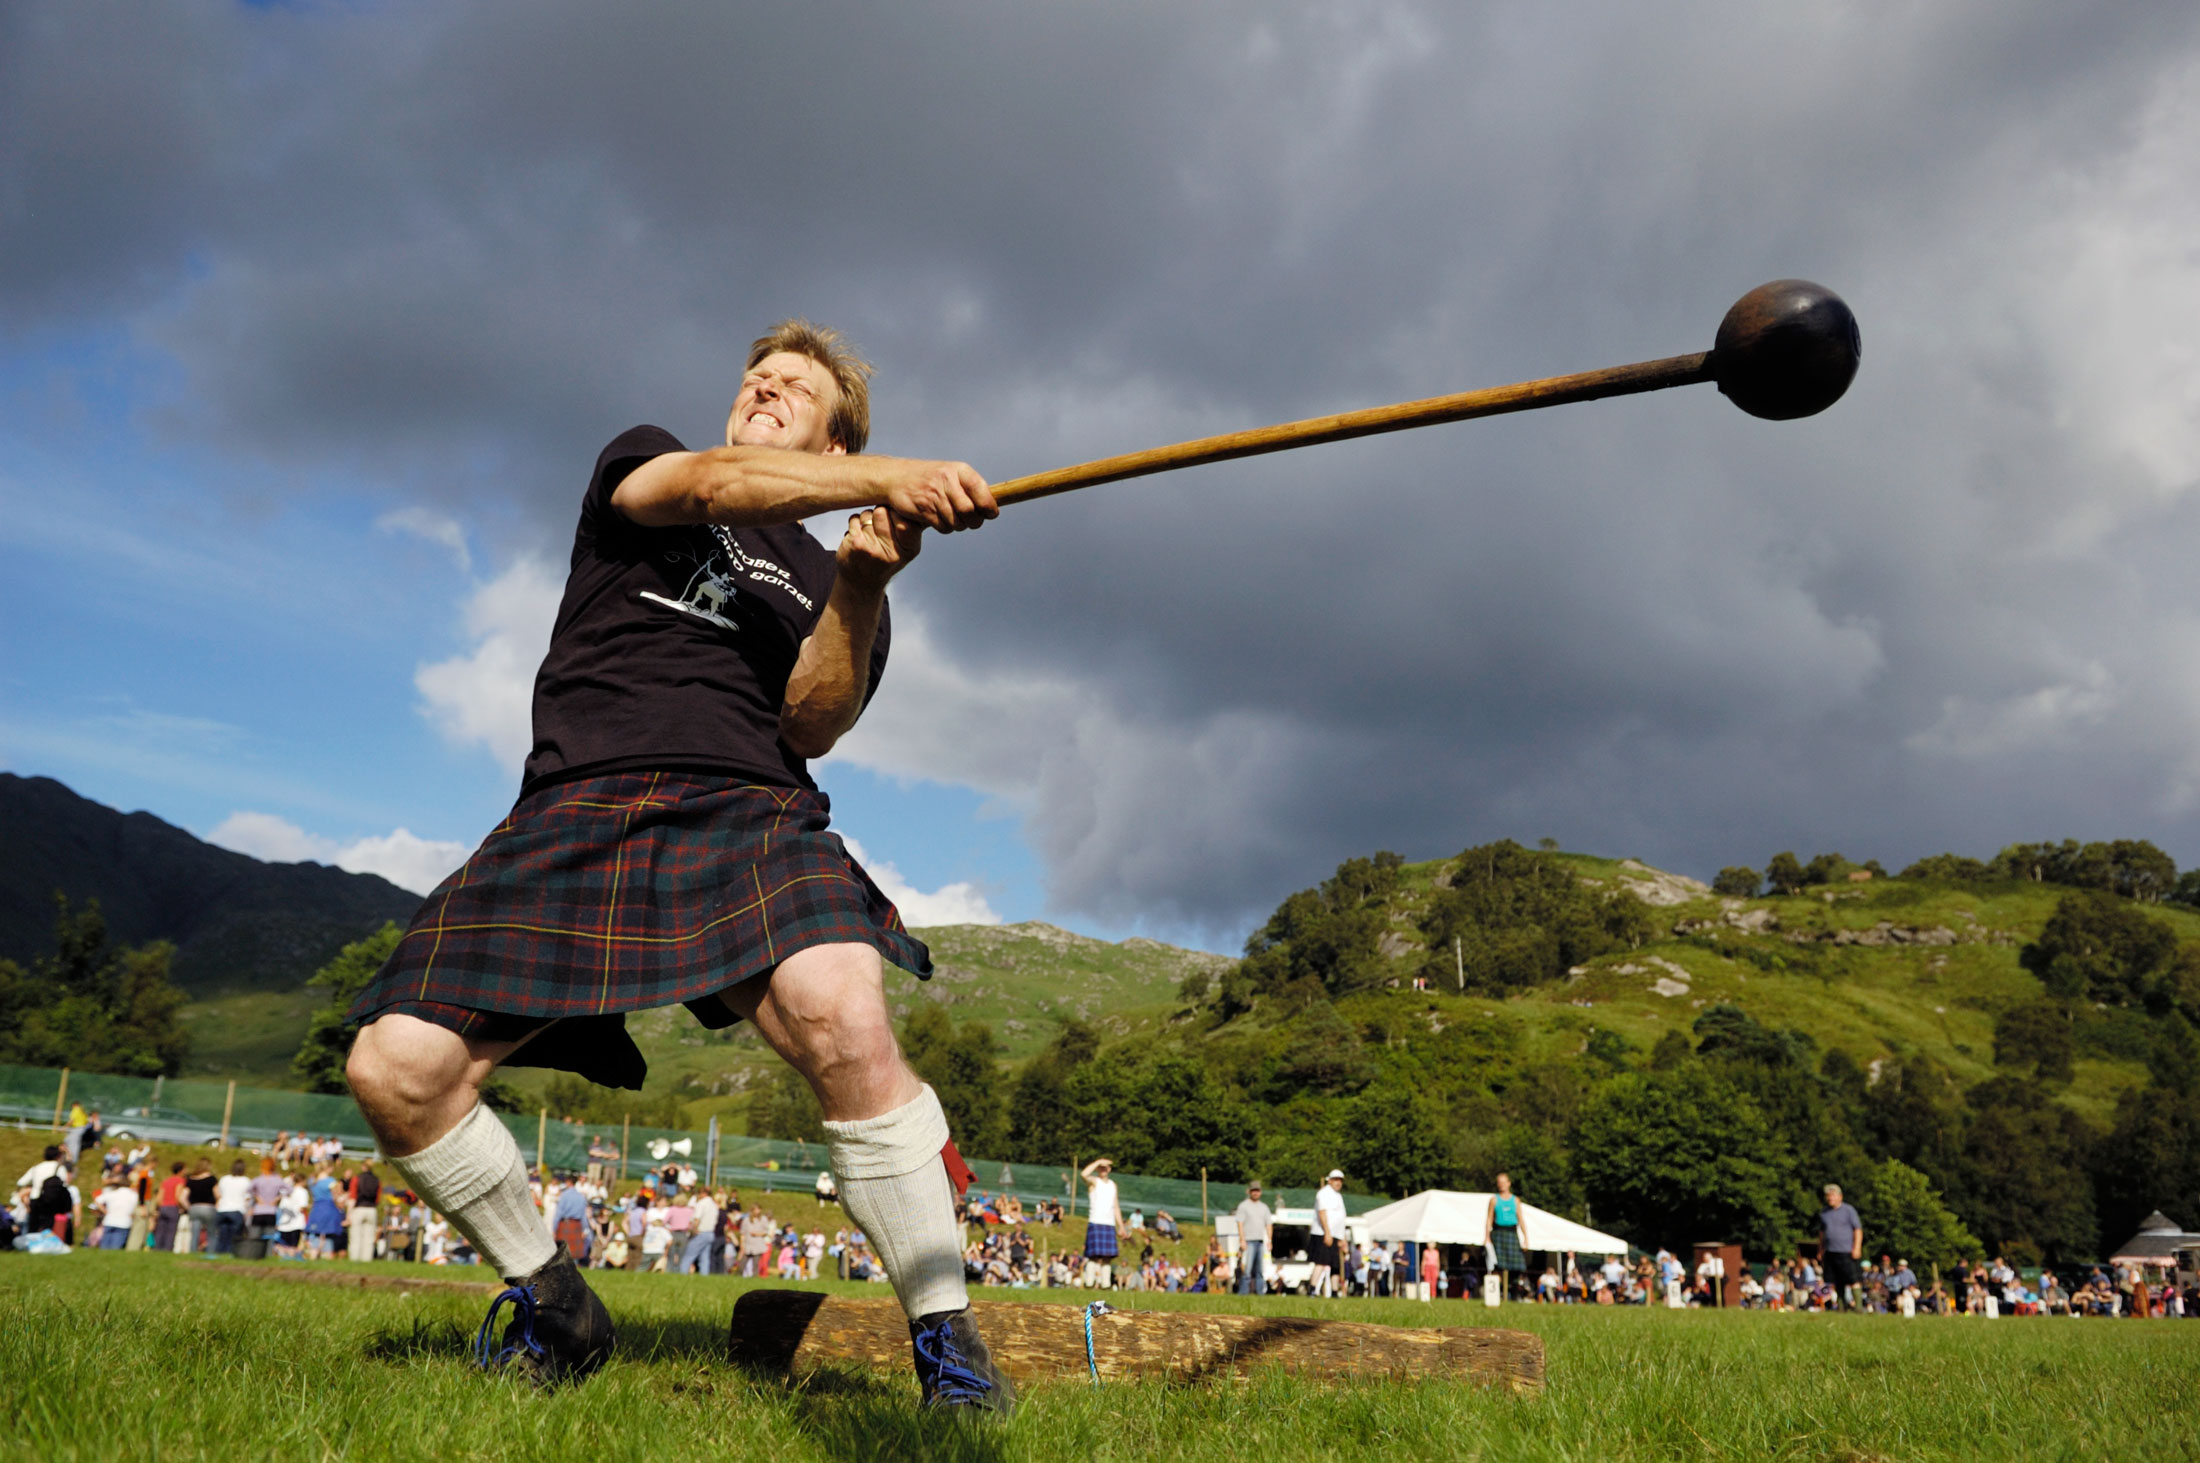 scottish highland games